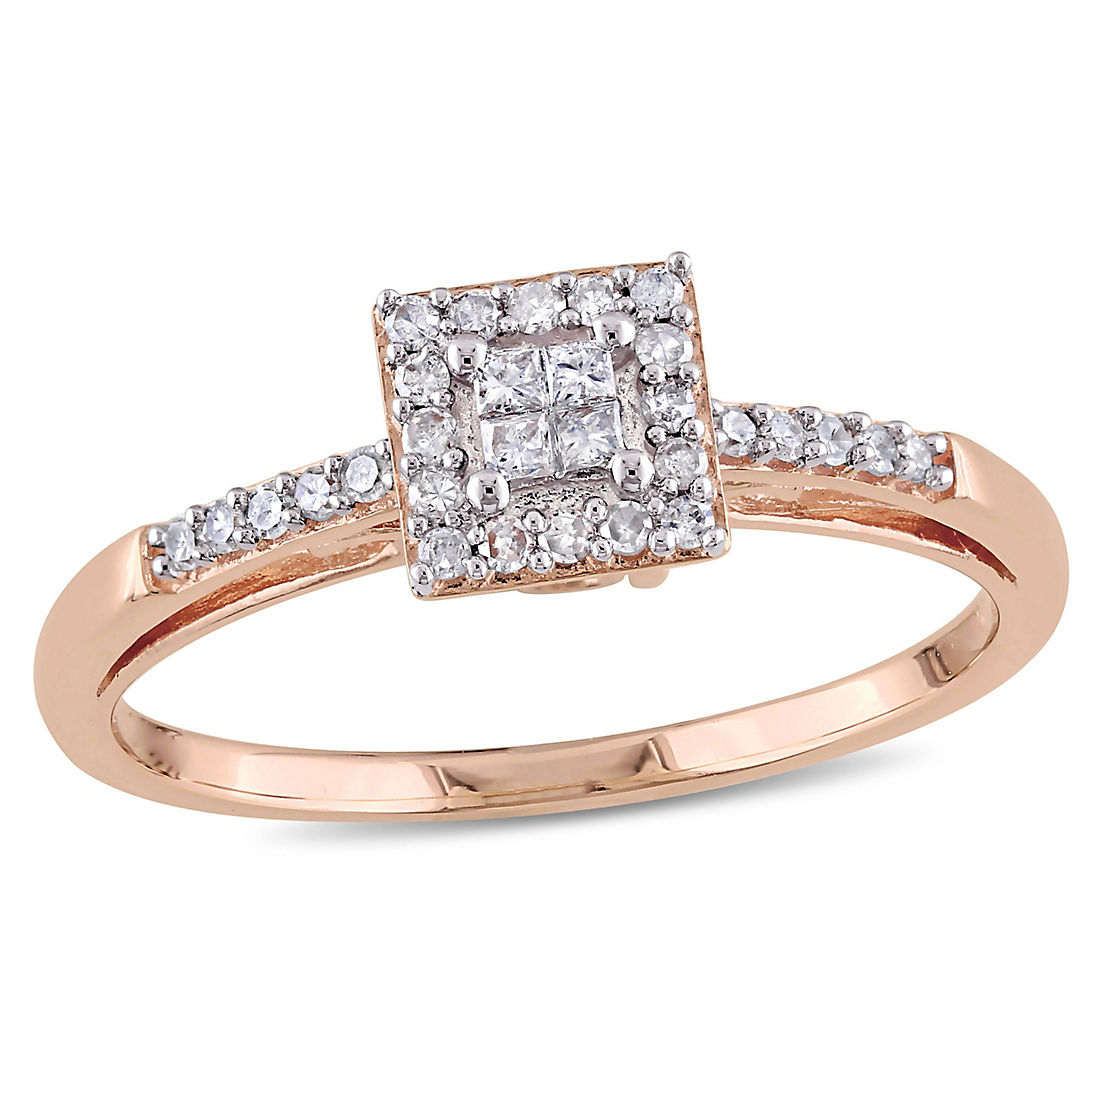 19 ct. t.w. Diamond Ring in 10k Rose Gold - BJs Wholesale Club